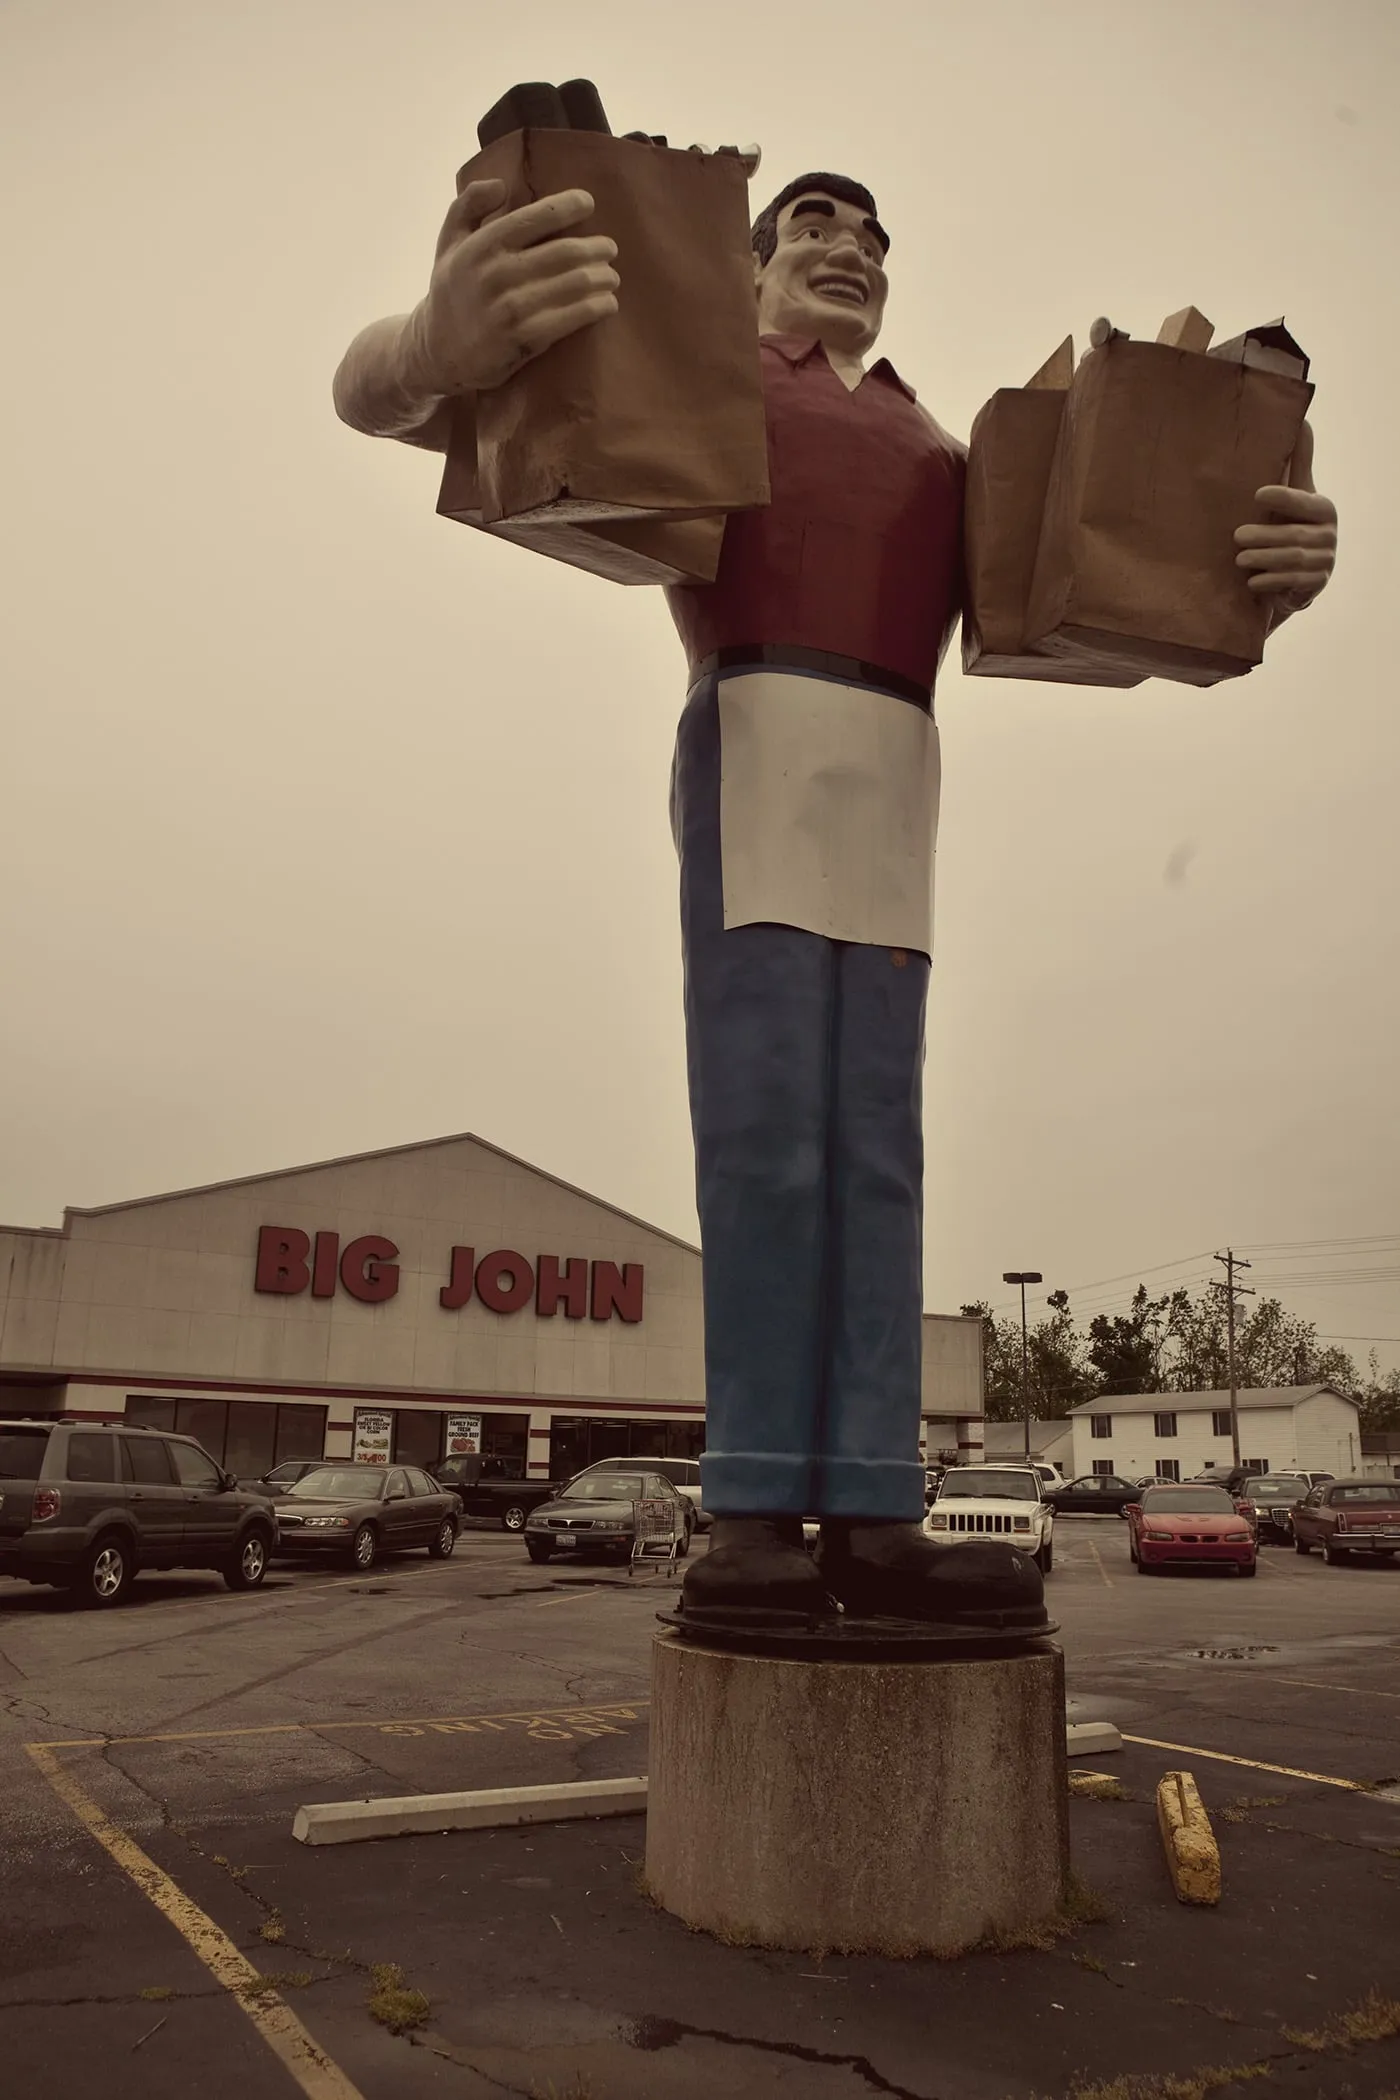 Big John Grocery Clerk, a roadside attraction in Metropolis, Illinois